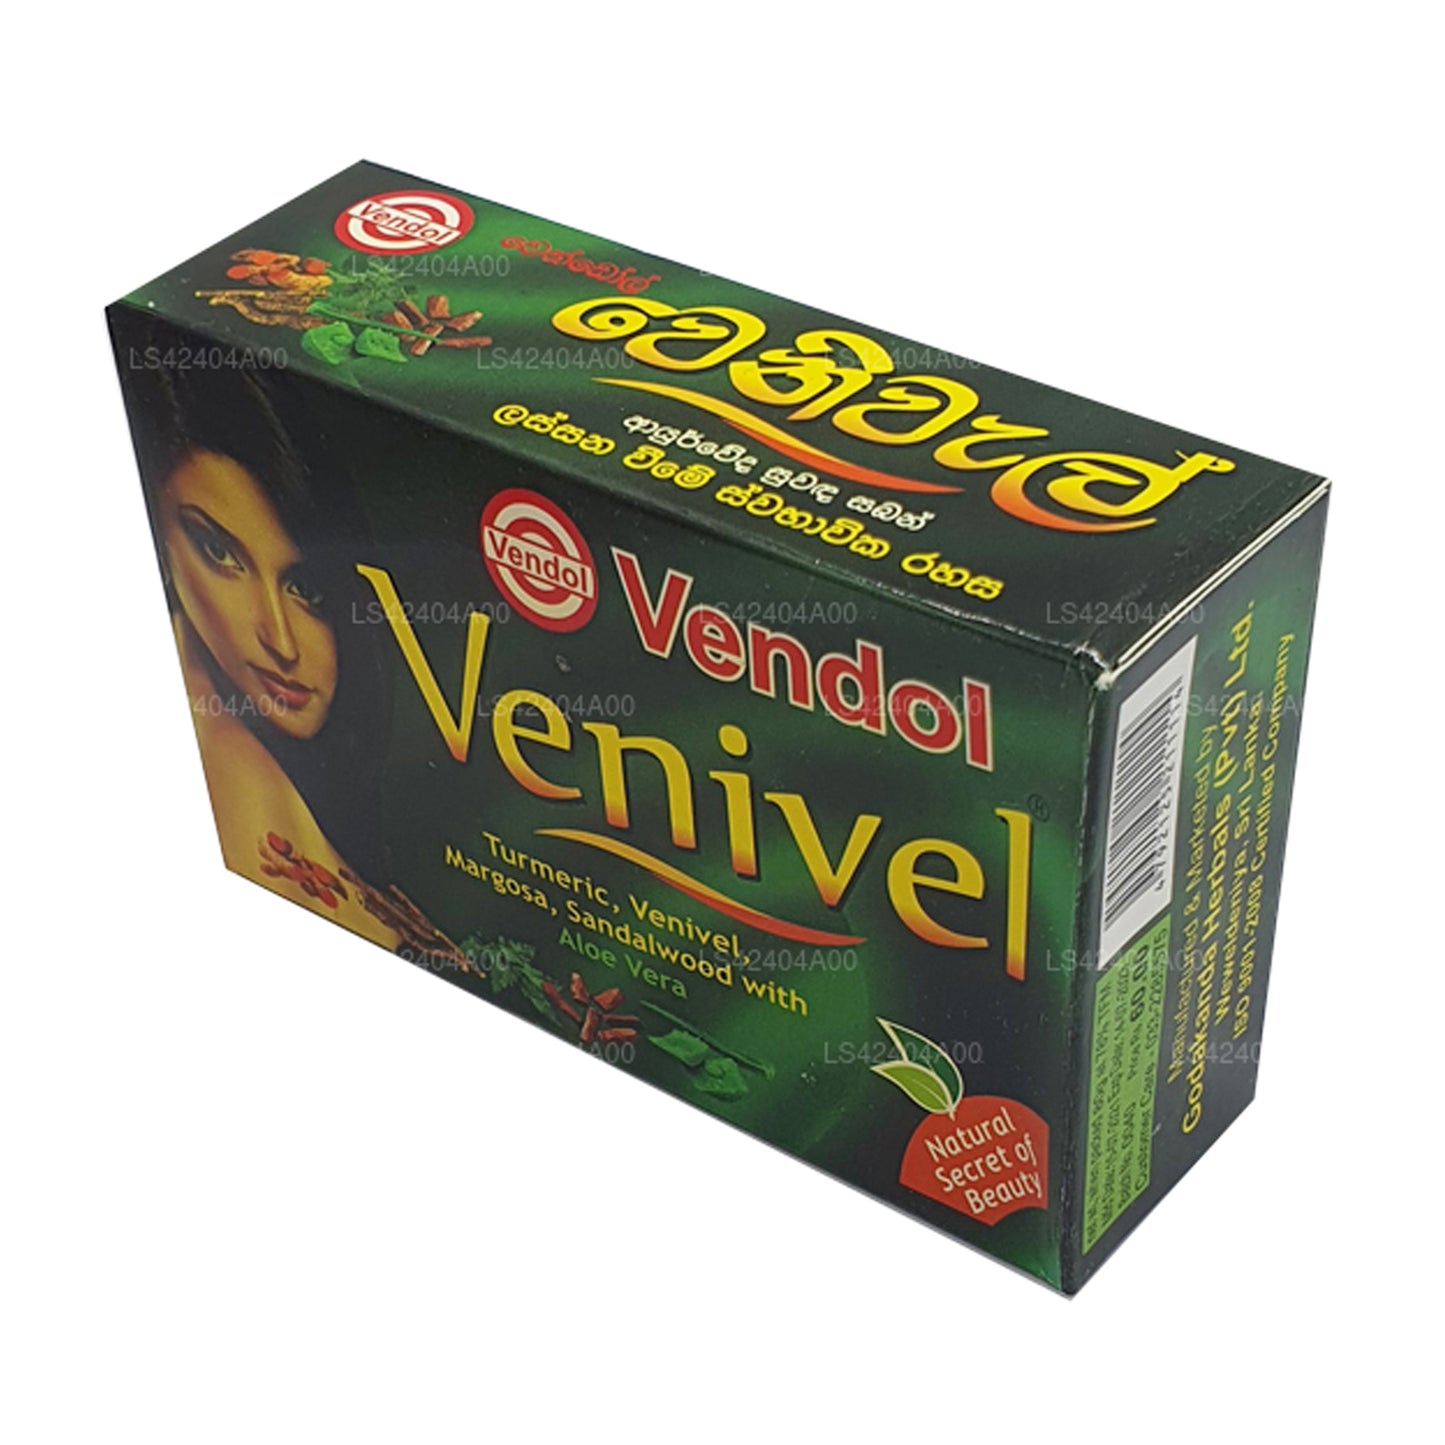 Vendol Venivel 草本香皂 (80 克)